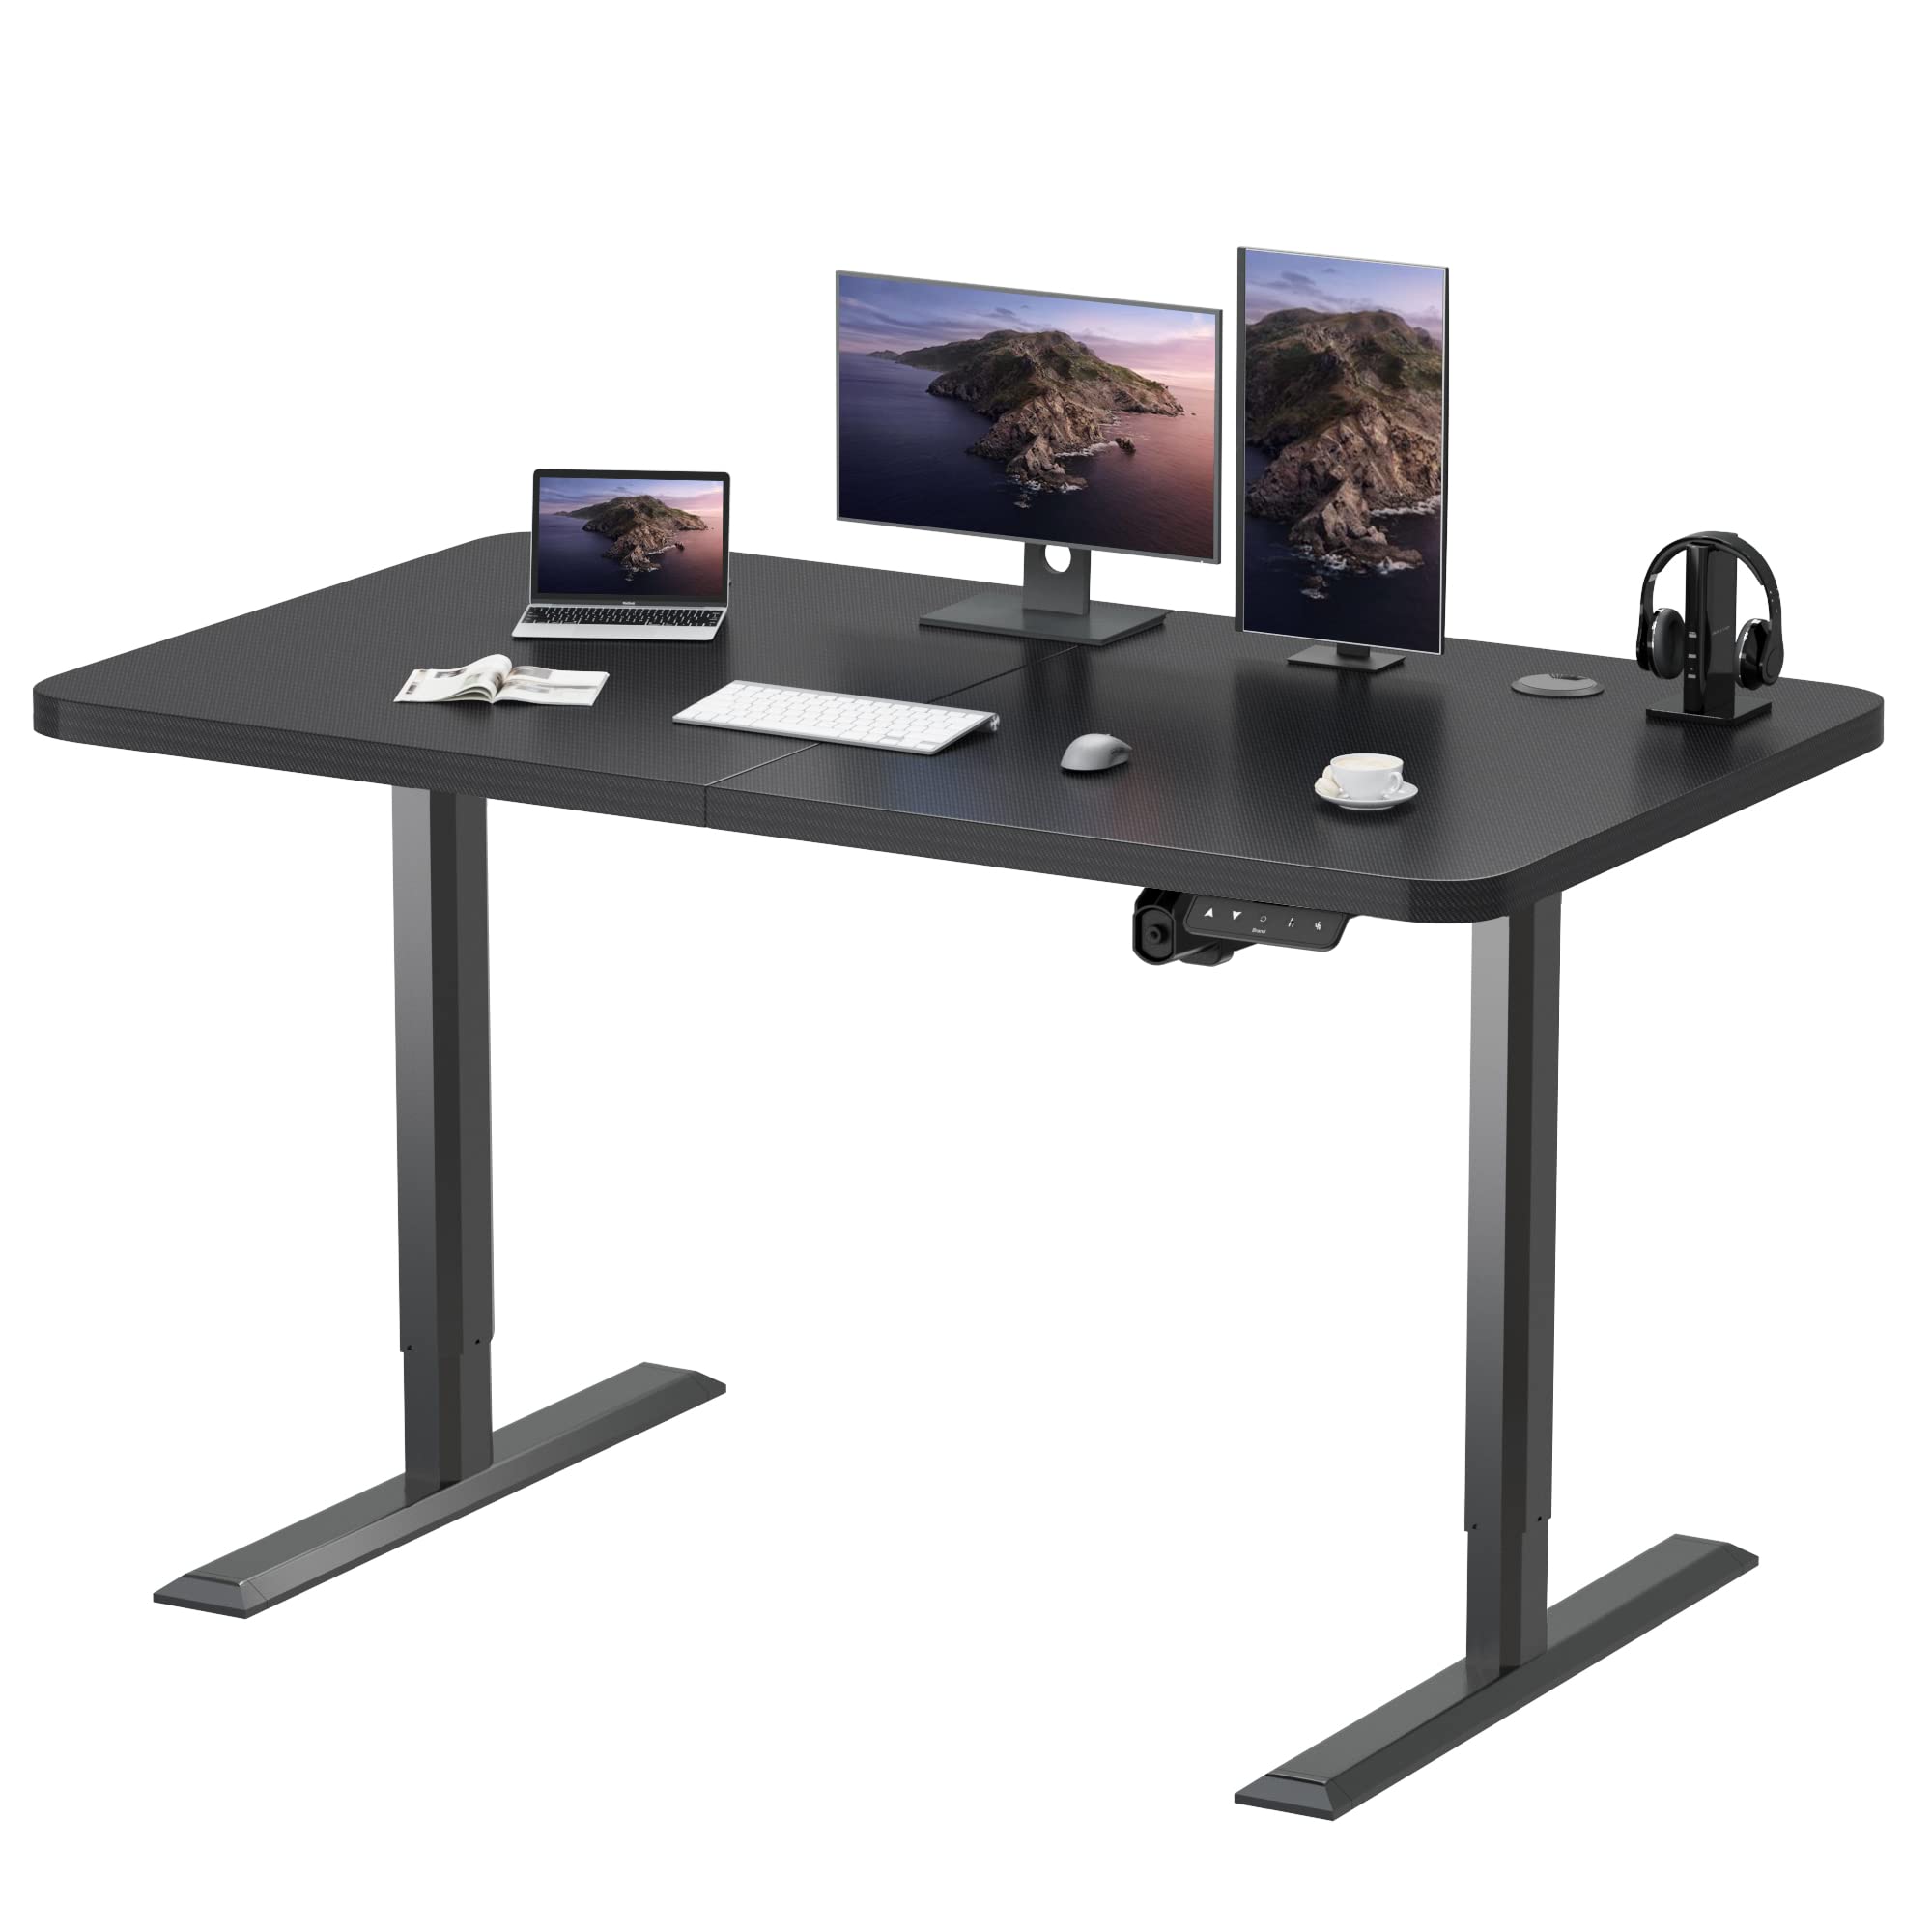 JUMMIcO Standing Desk Electric Adjustable Desk Large 55 x 24 Sit Stand Up Desk Home Office computer Desk Memory Preset with T-Sh